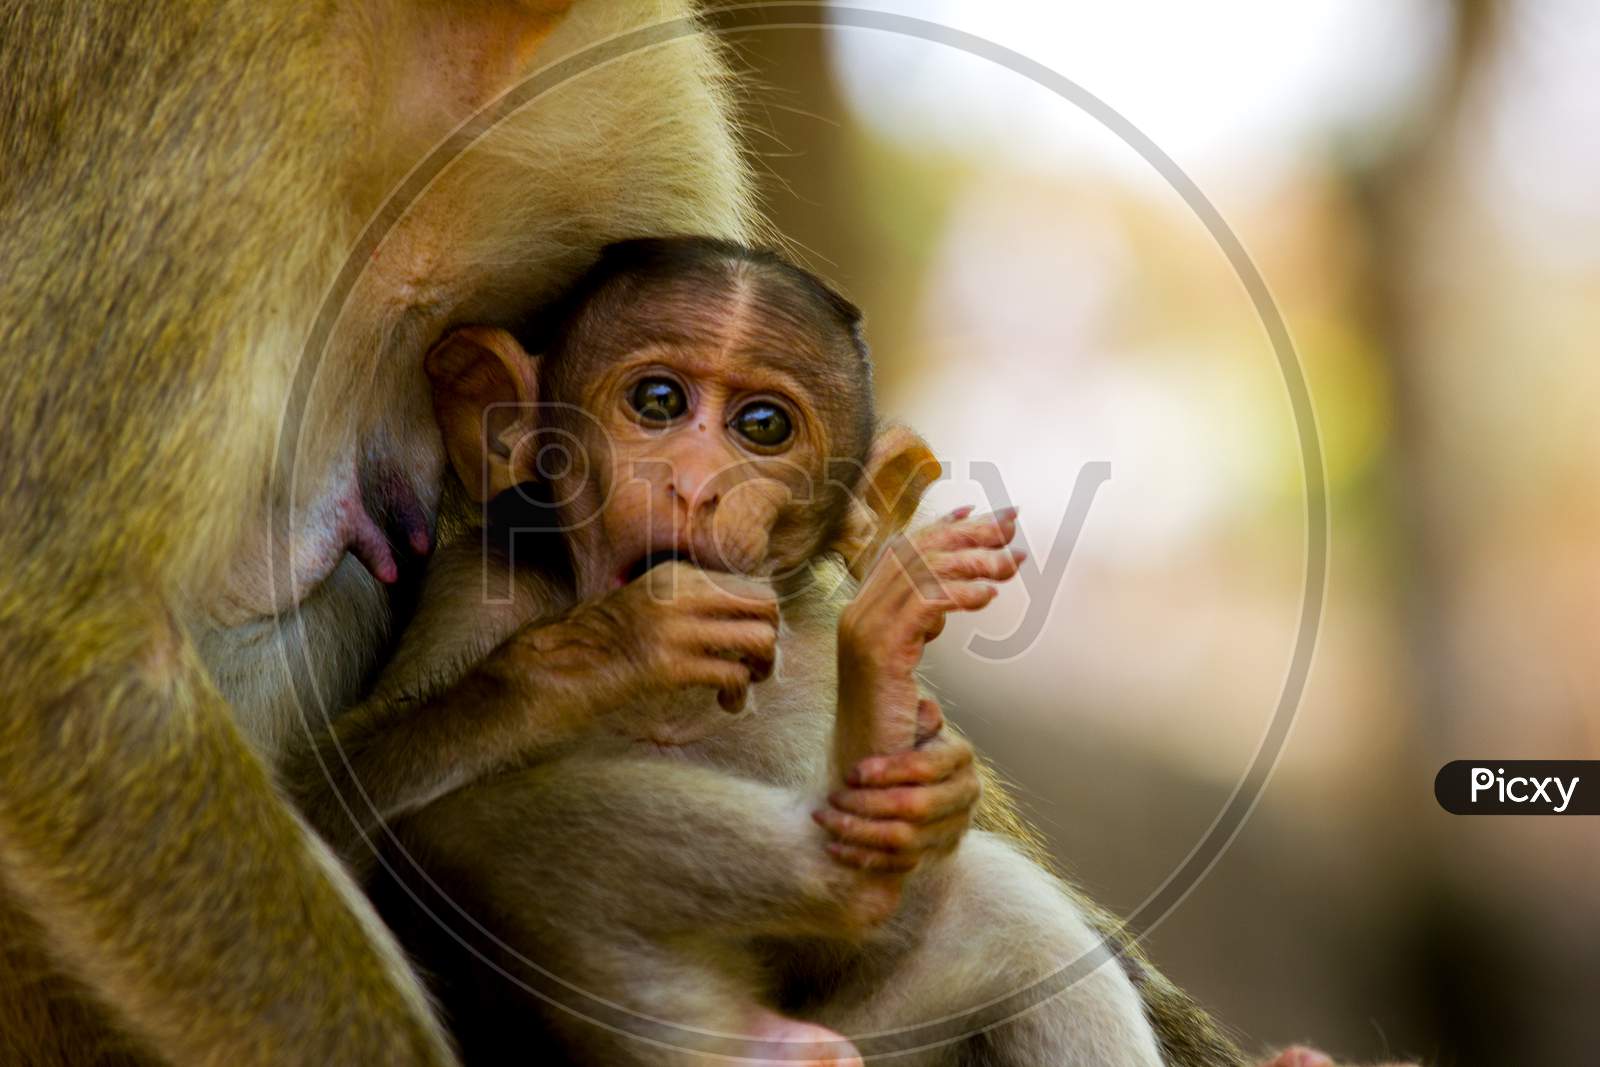 A Baby Monkey with a Monkey